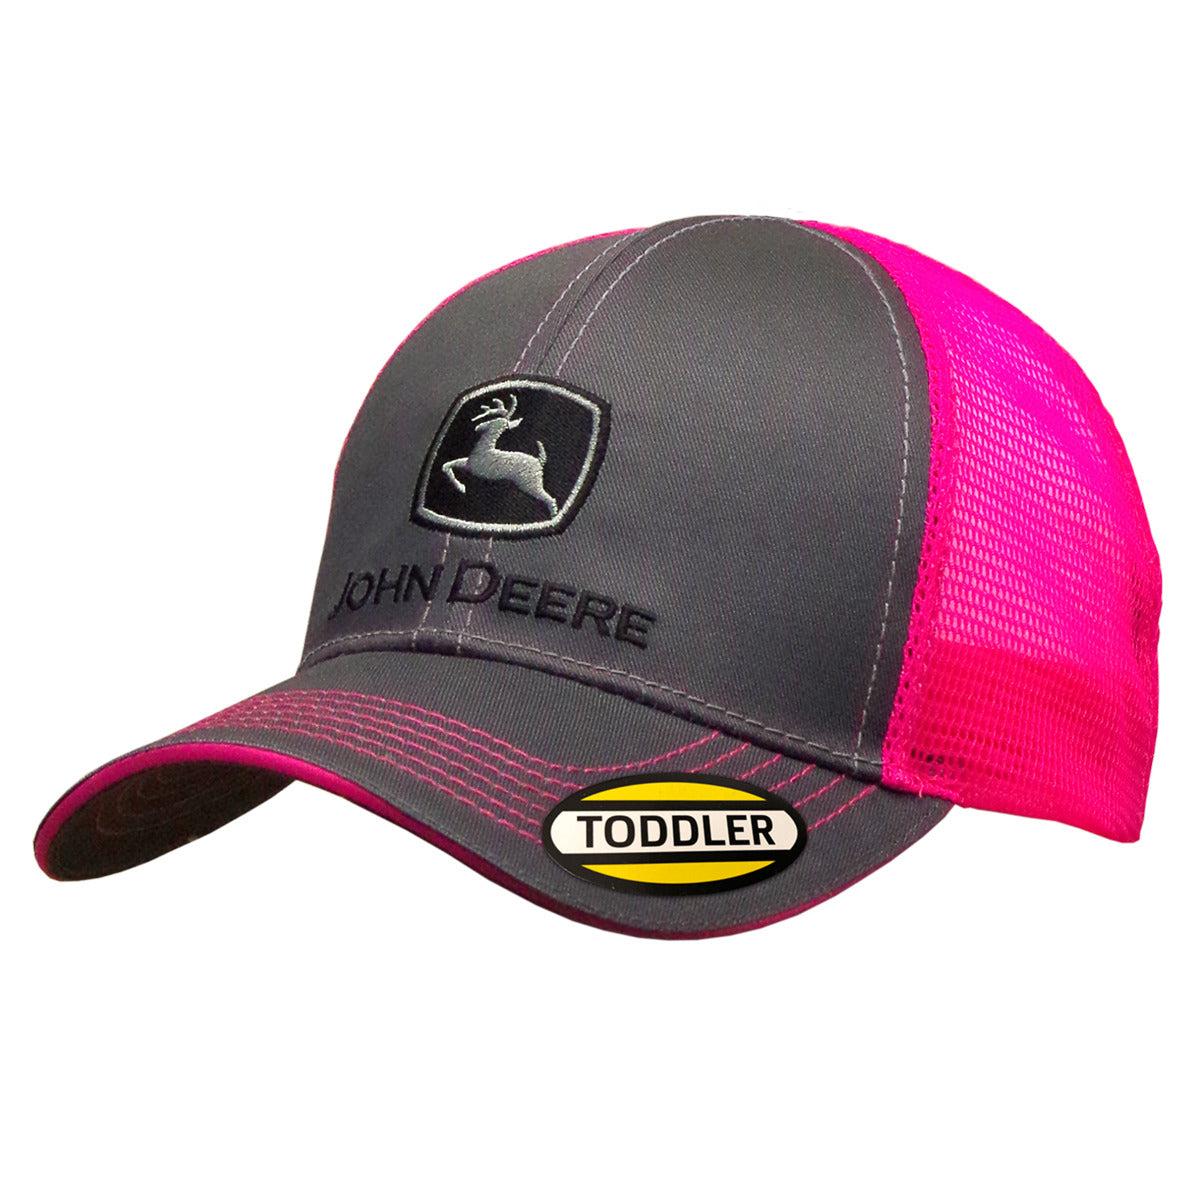 John Deere Toddler Neon Pink Mesh Back Hat/Cap - LP71415